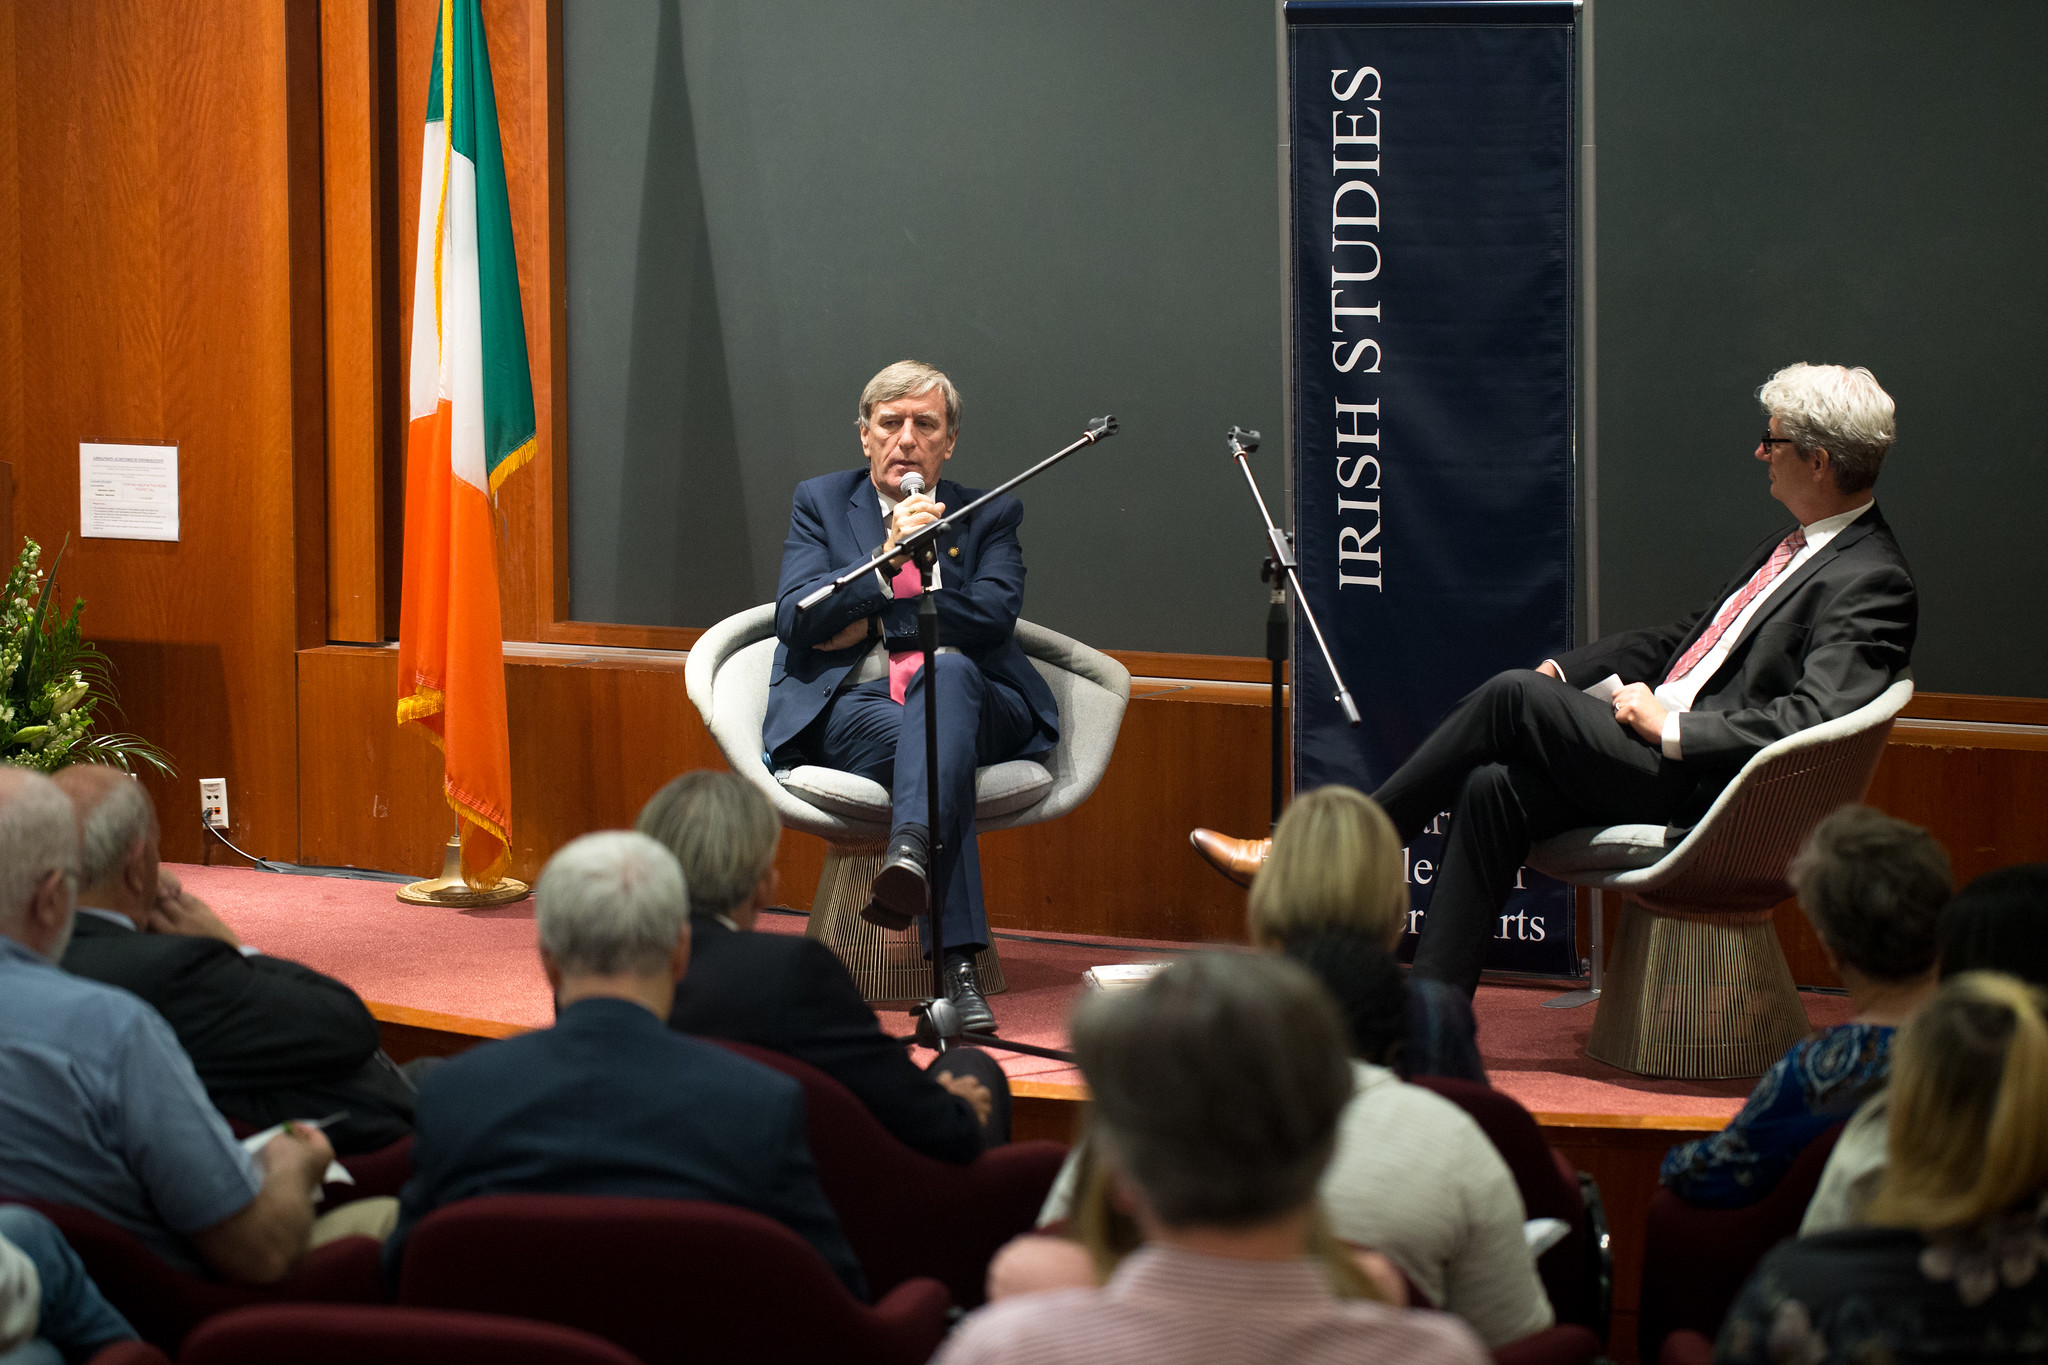 Event recording of Irish Ambassador's visit to the US